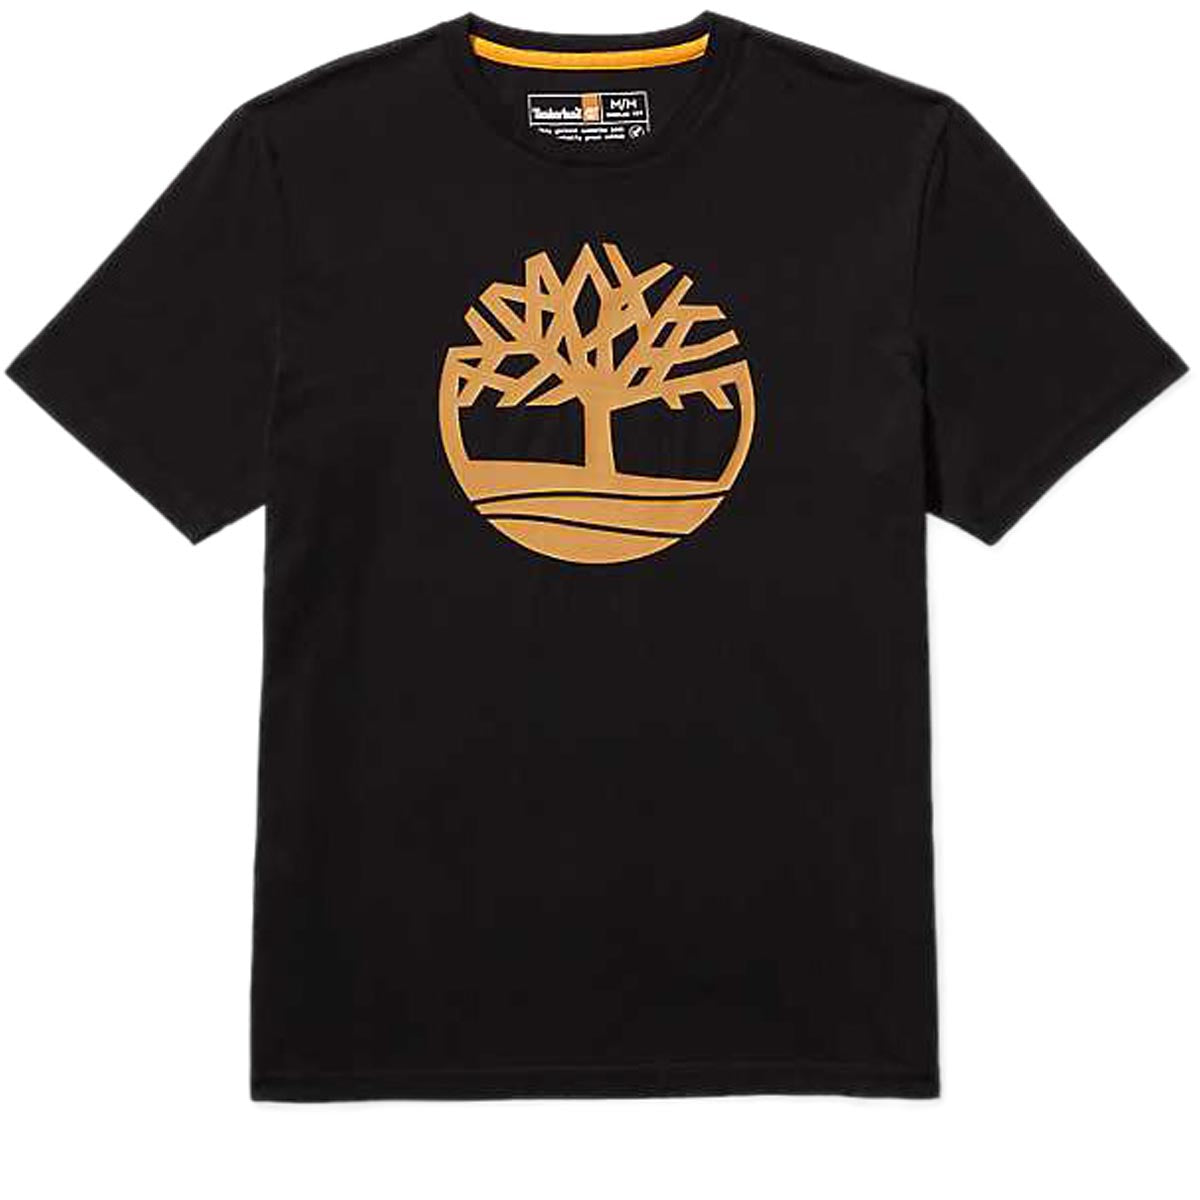 Timberland Kennebec Tree Logo T-Shirt - Black/Wheat Boot image 1